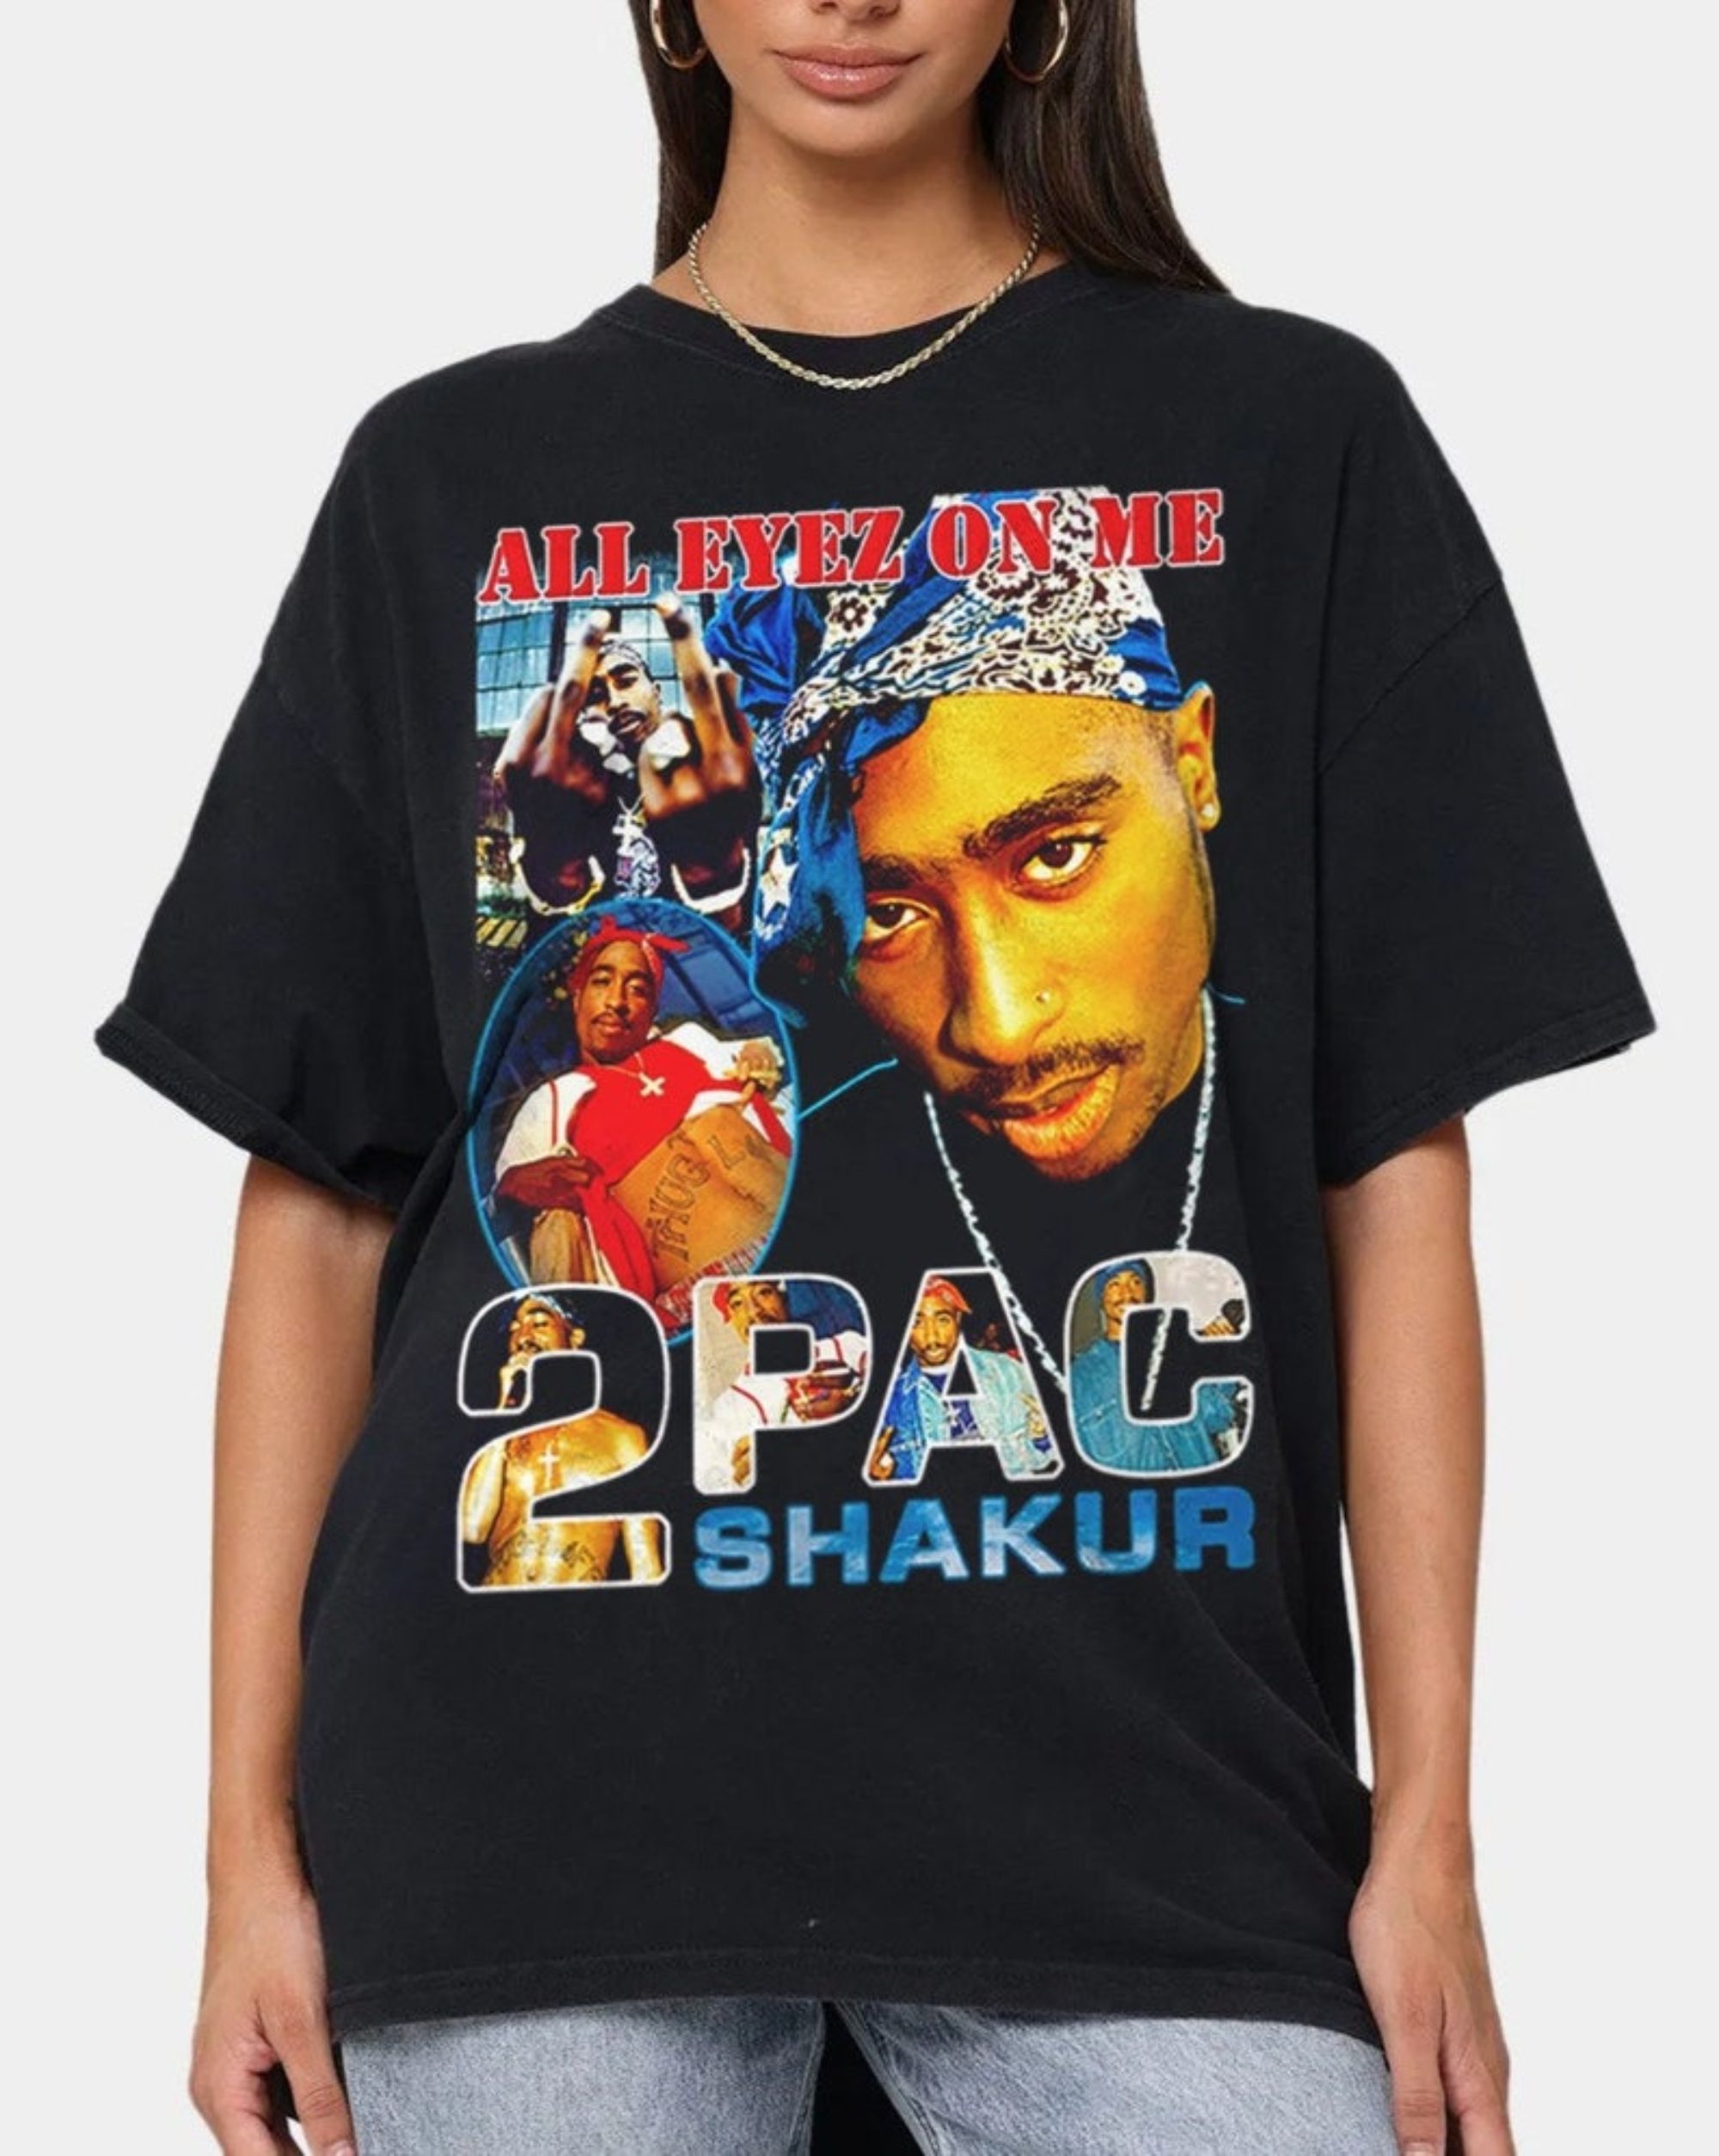 2pac rap tee tupac shakur t shirt men's women vintage 90s style shirt